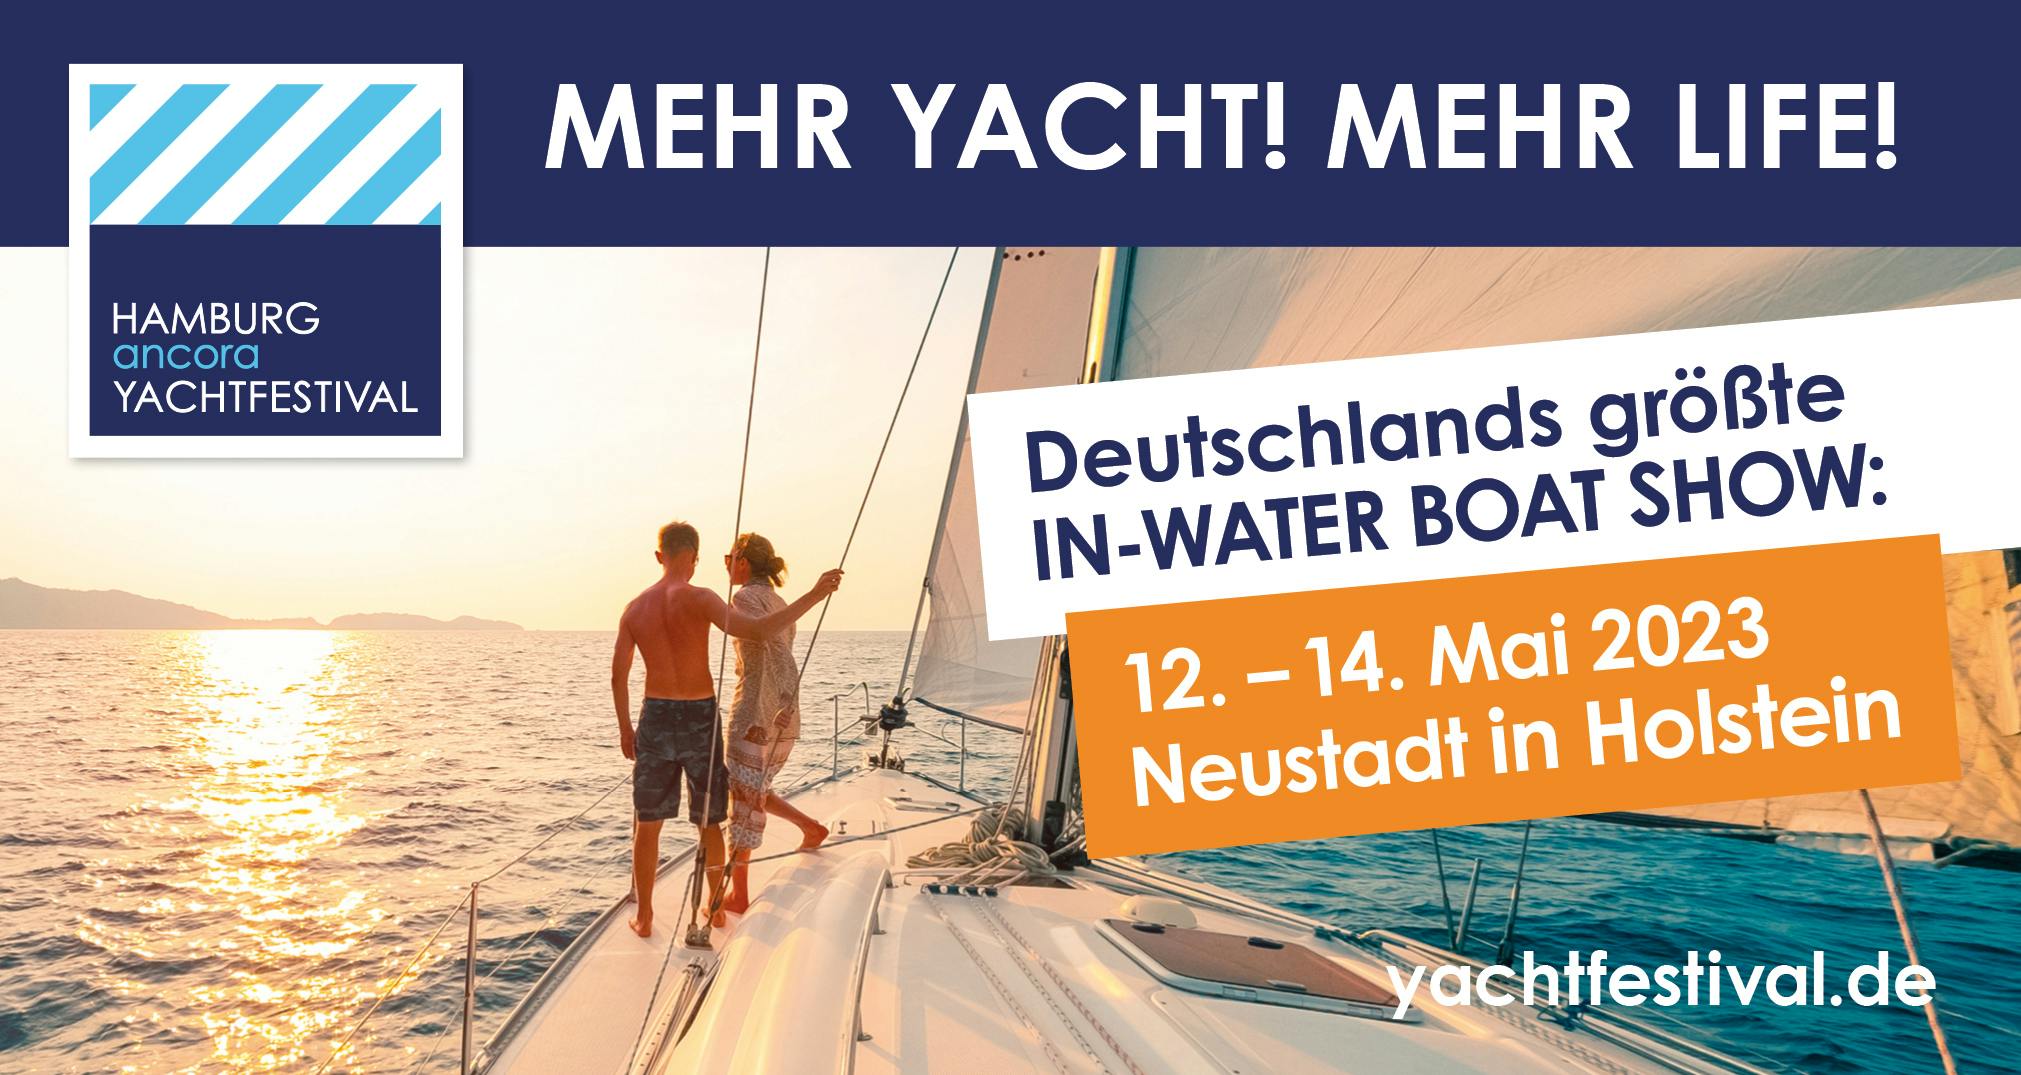 hamburg yacht festival 2023